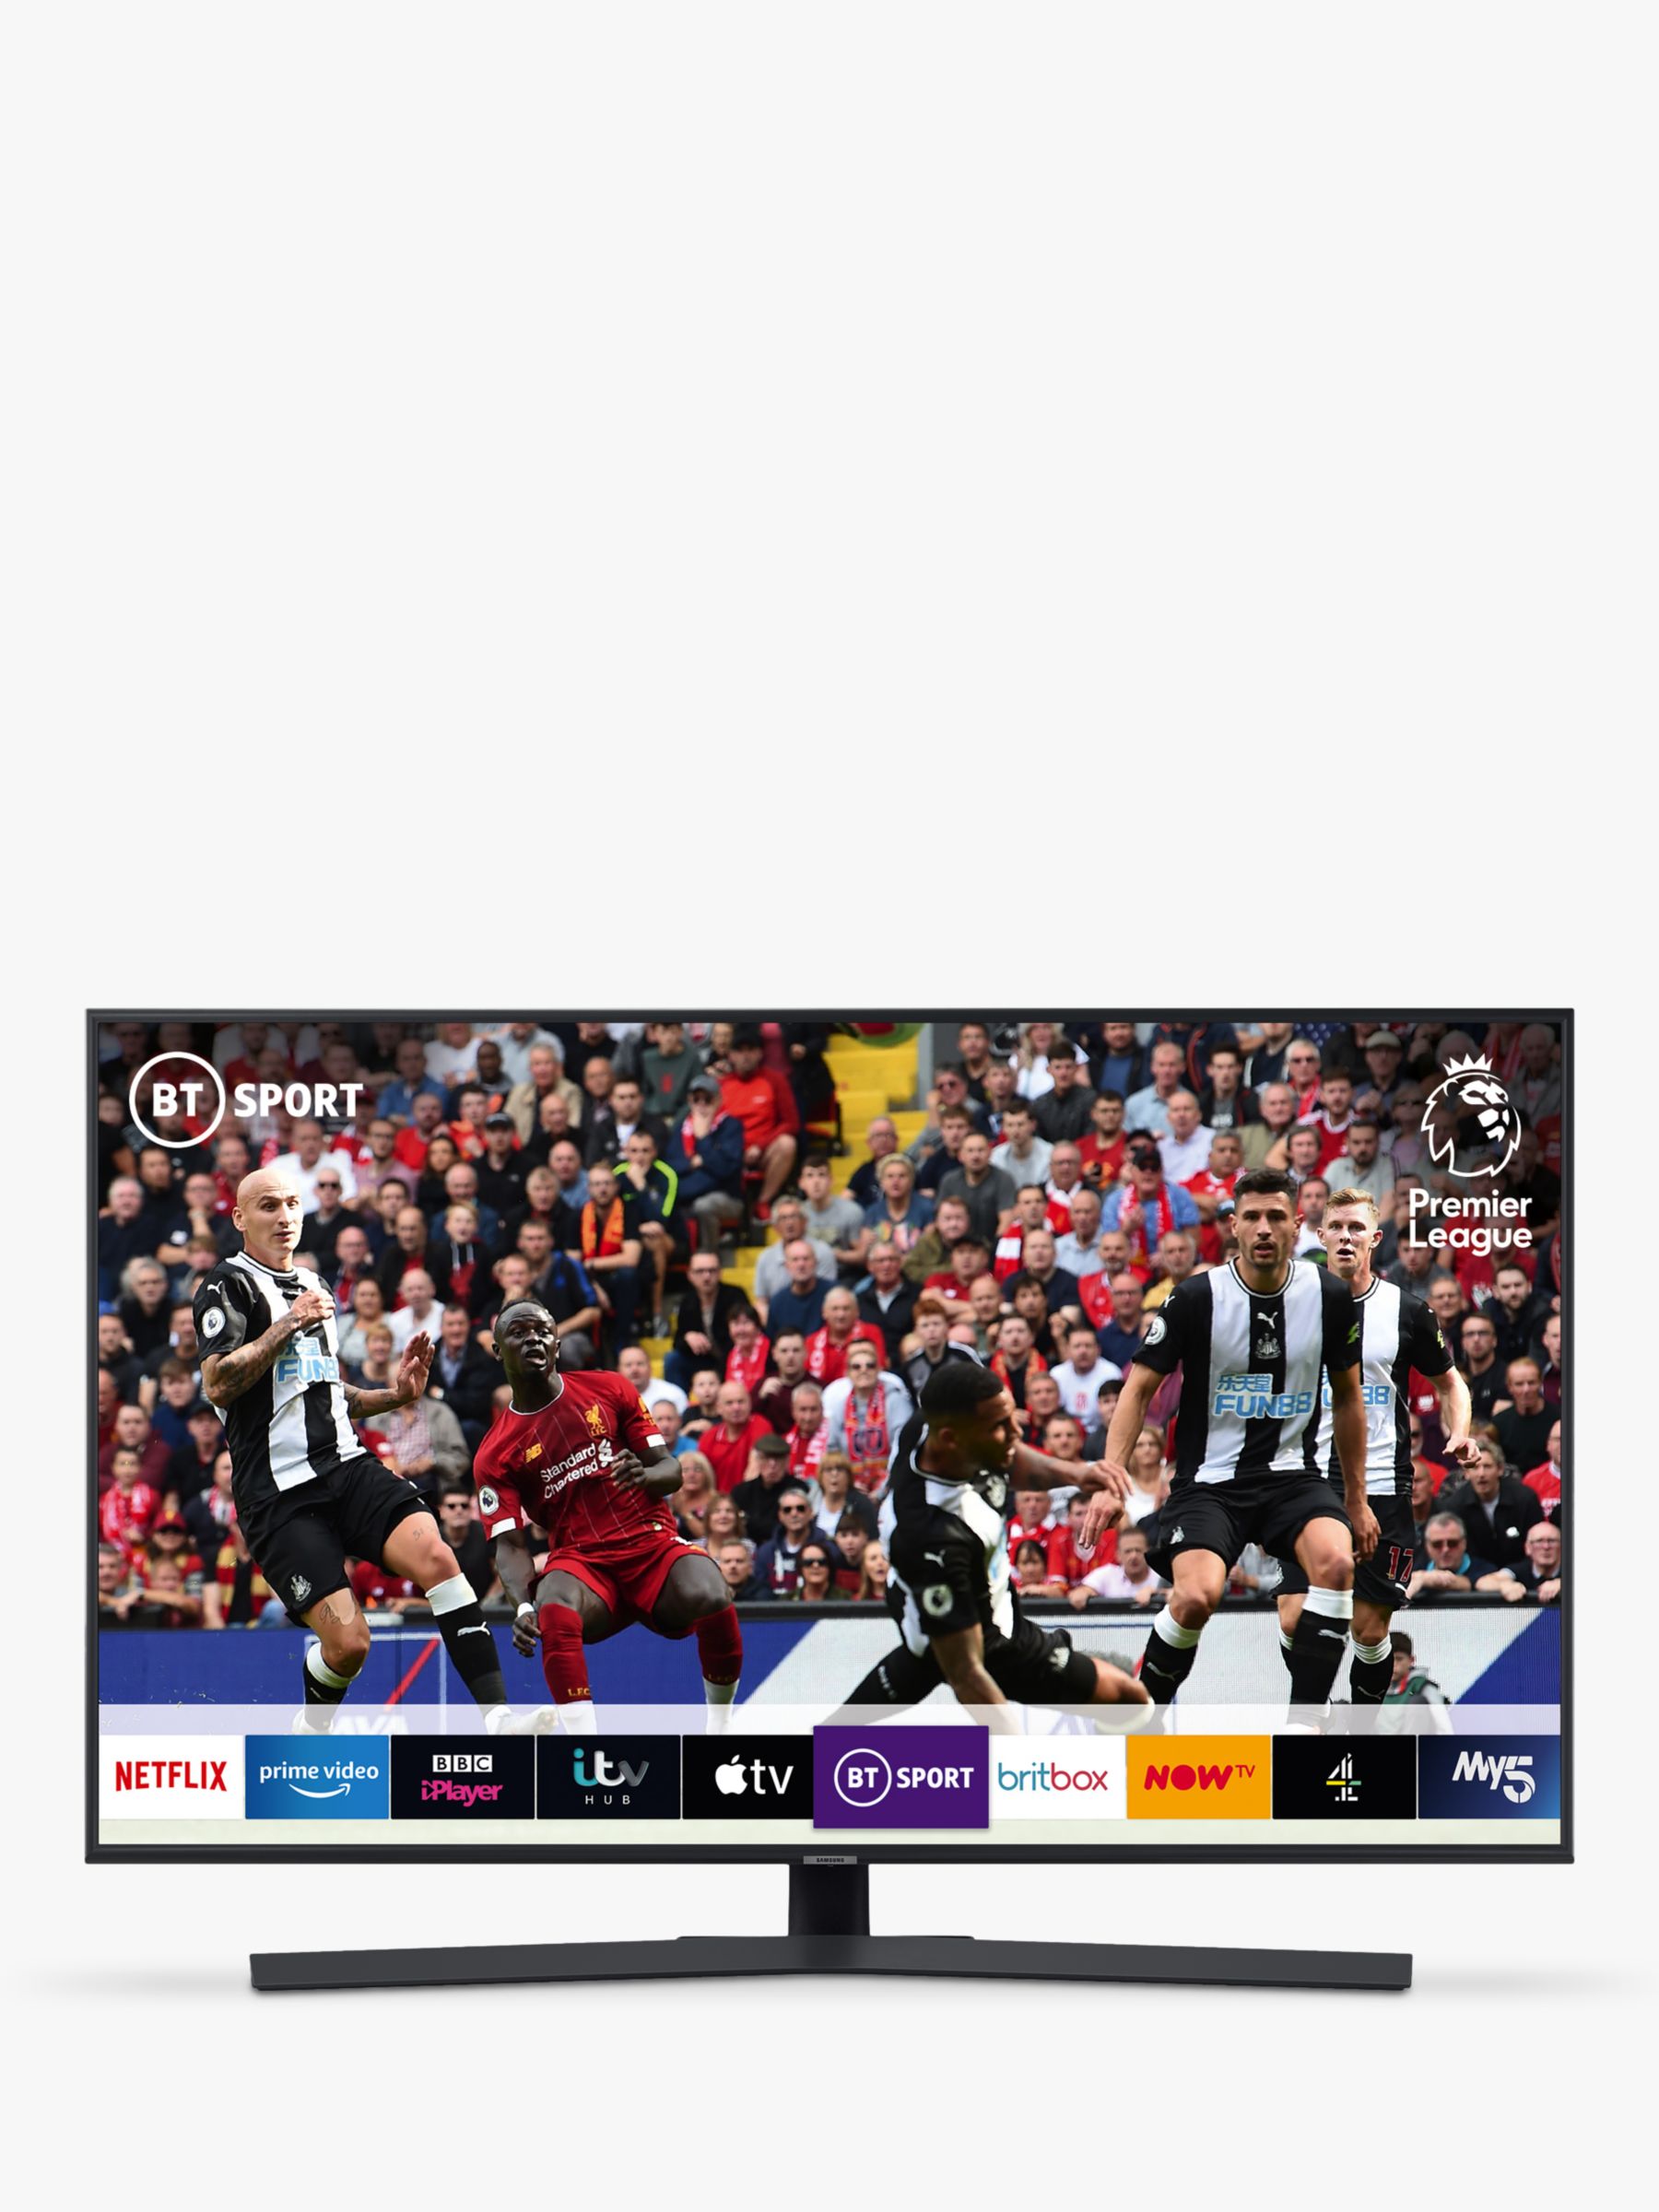 Samsung UE55RU7400 (2019) HDR 4K Ultra HD Smart TV, 55" with TVPlus/Freesat HD & Apple TV App, Titan Gray